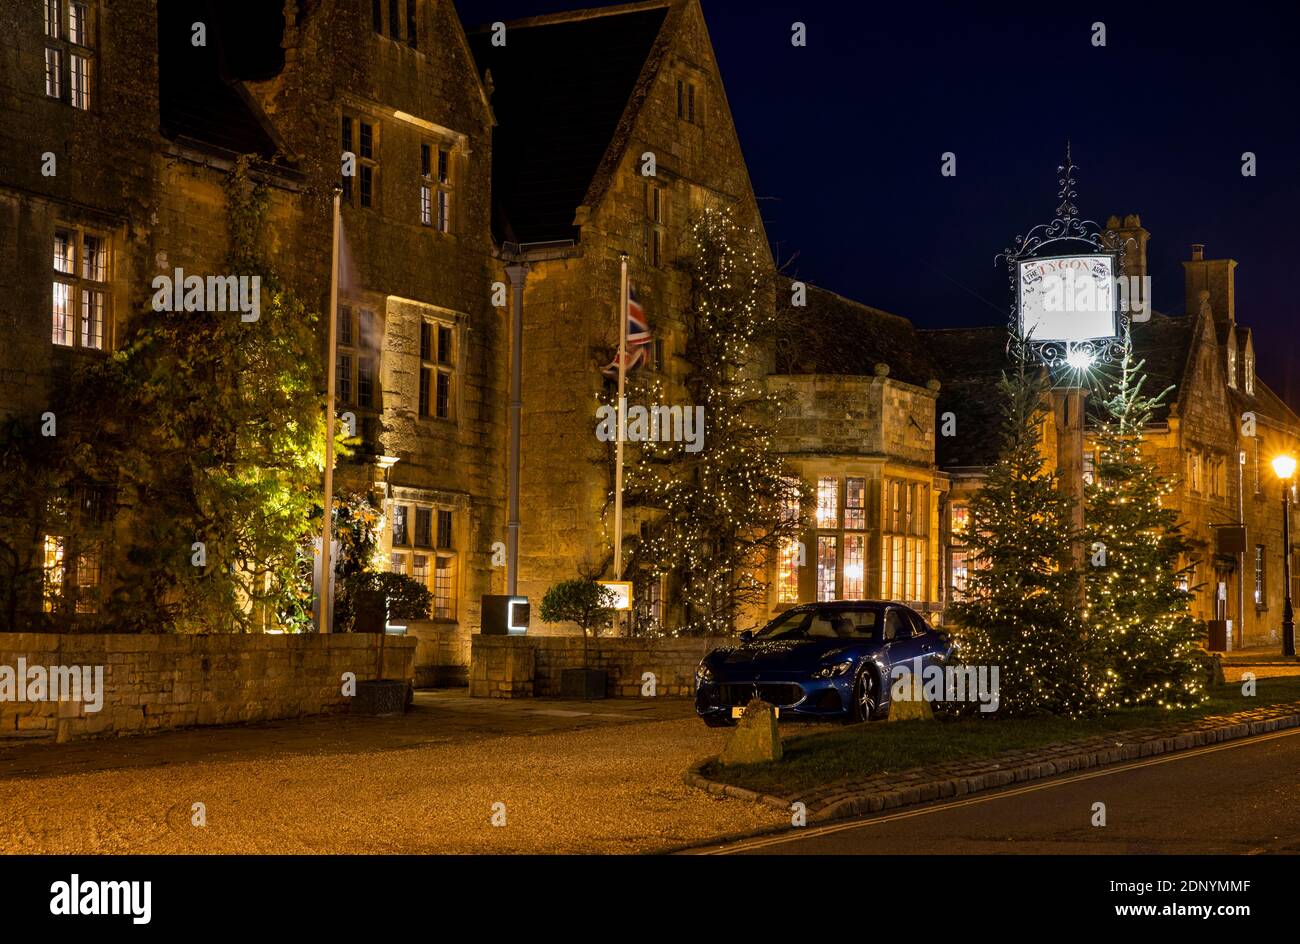 UK, Gloucestershire, Broadway, High Street, Lygon Arms Hotel illuminated for Christmas Stock Photo